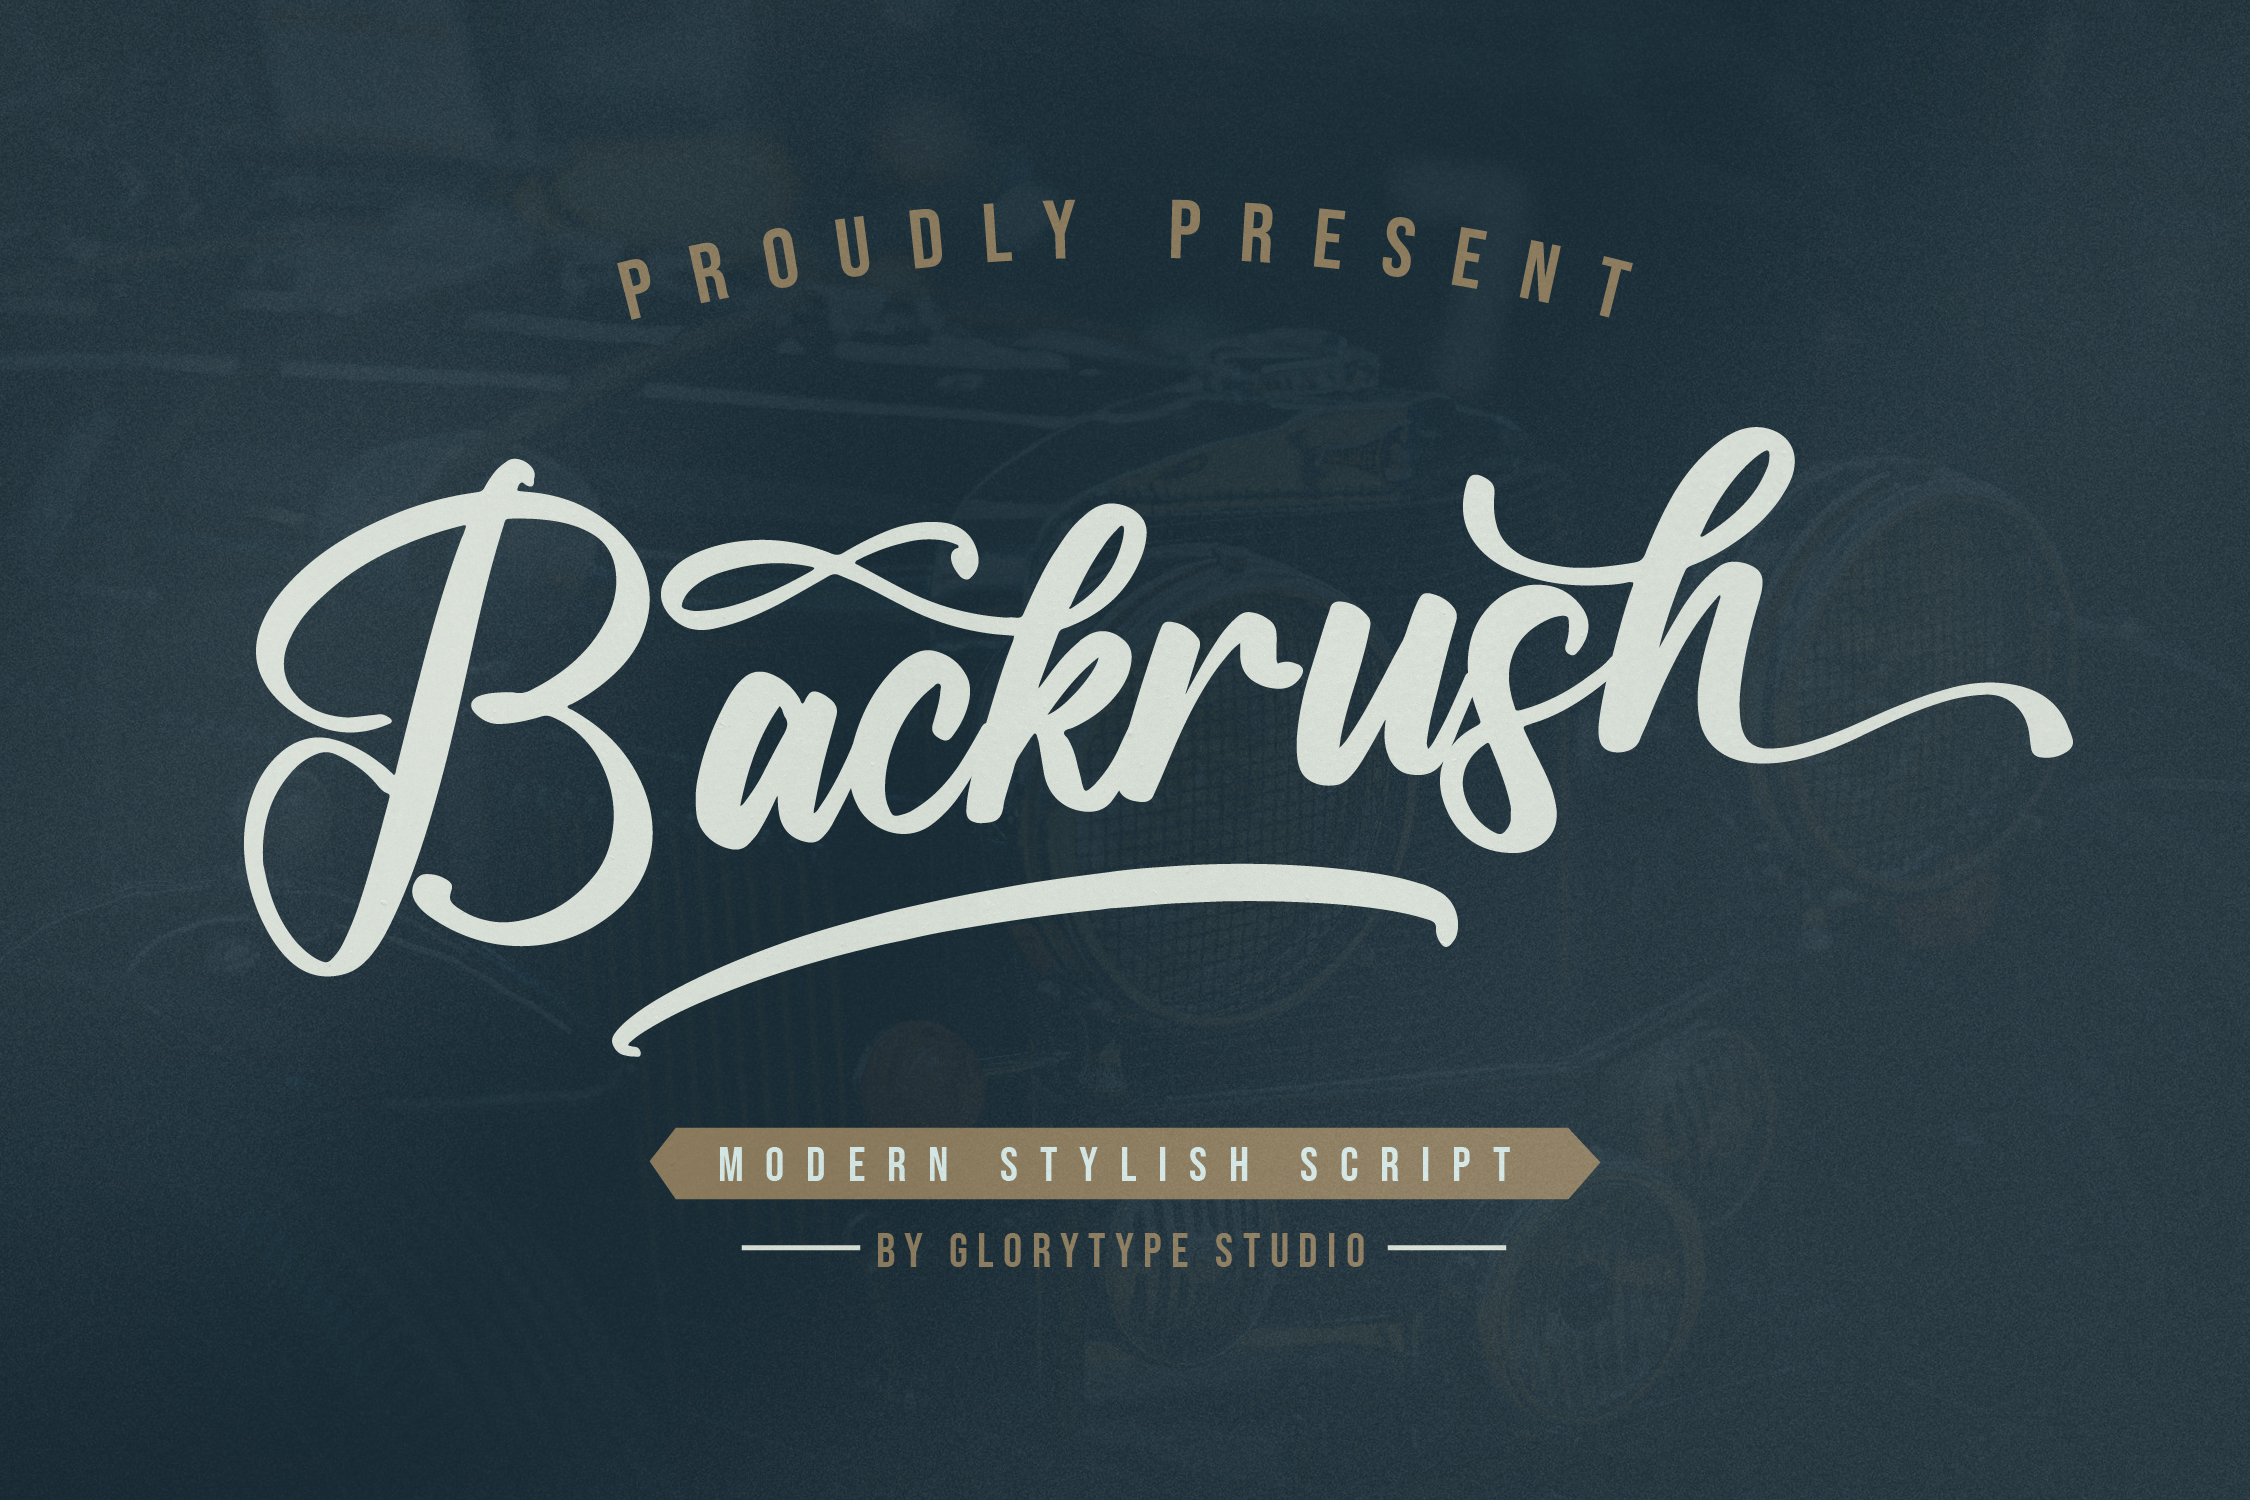 Backrush Script Font